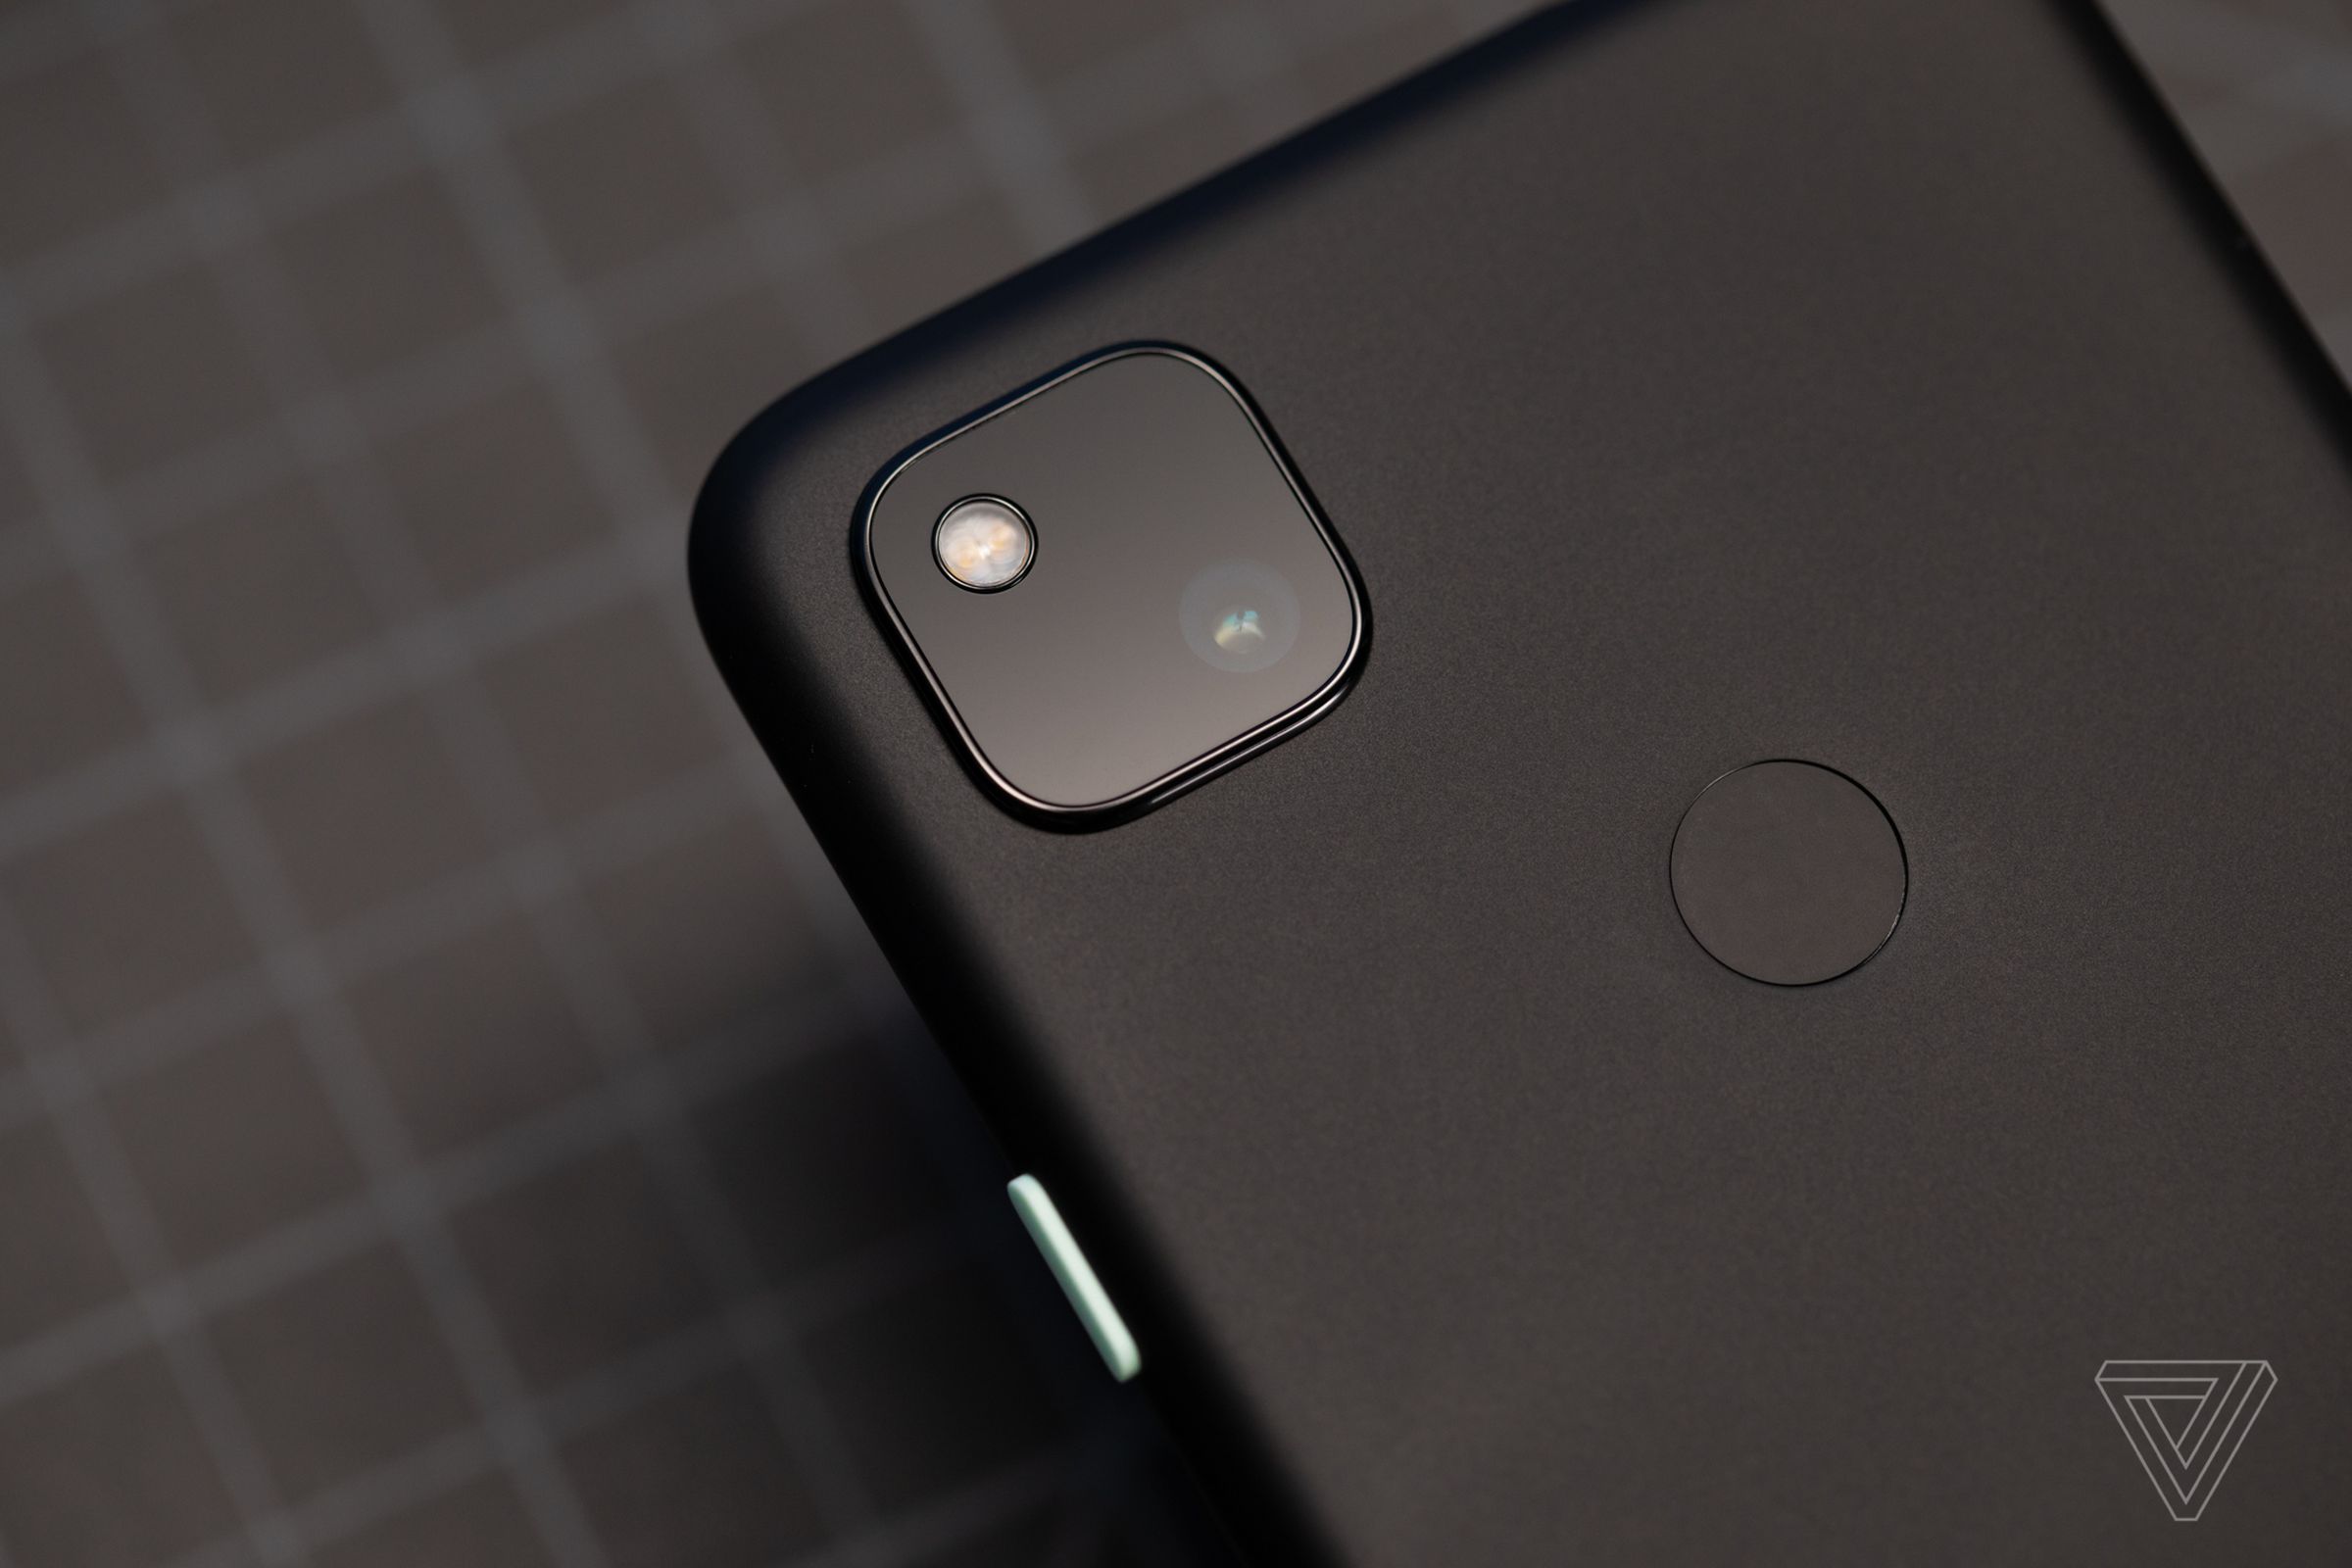 The Google Pixel 4A camera module with a single 12-megapixel sensor.